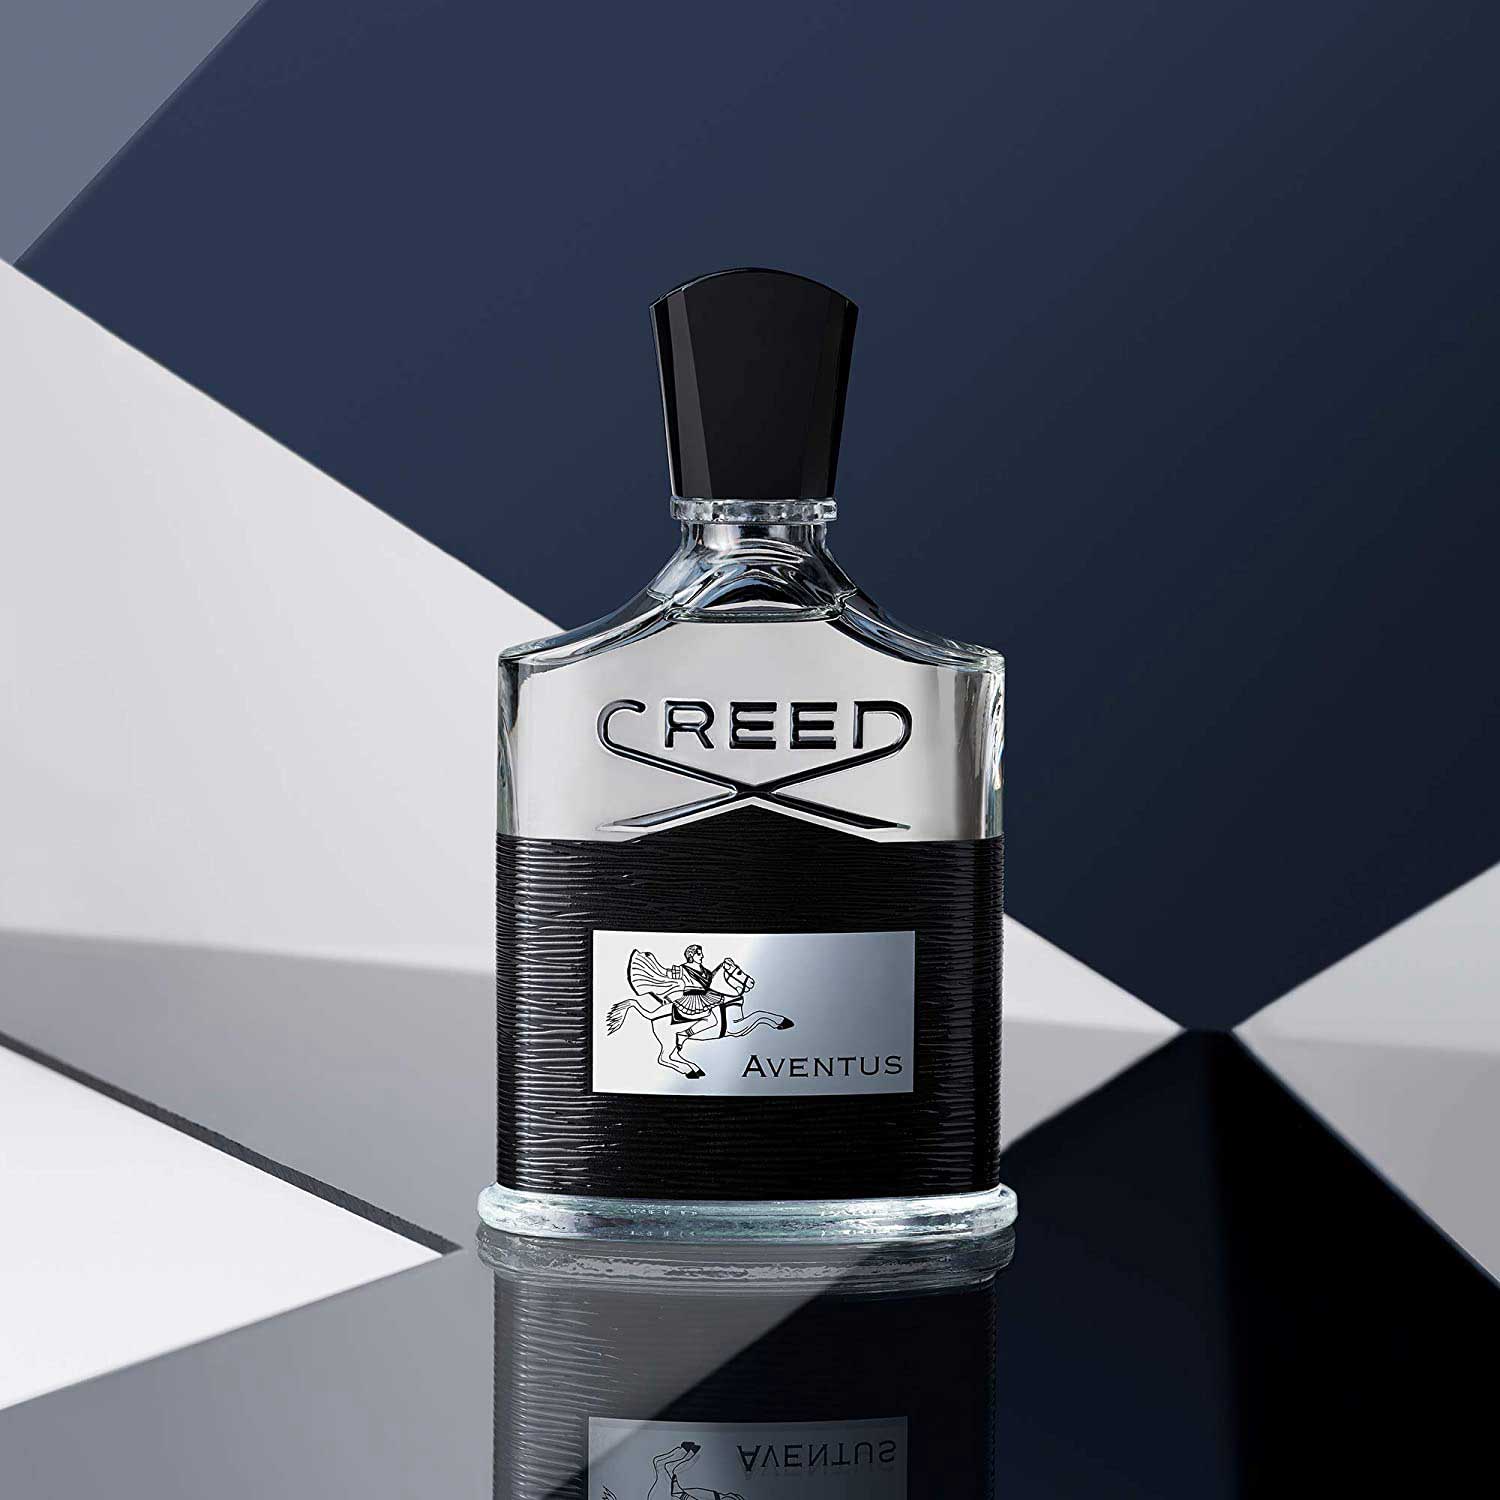 Creed-aventus-perfume